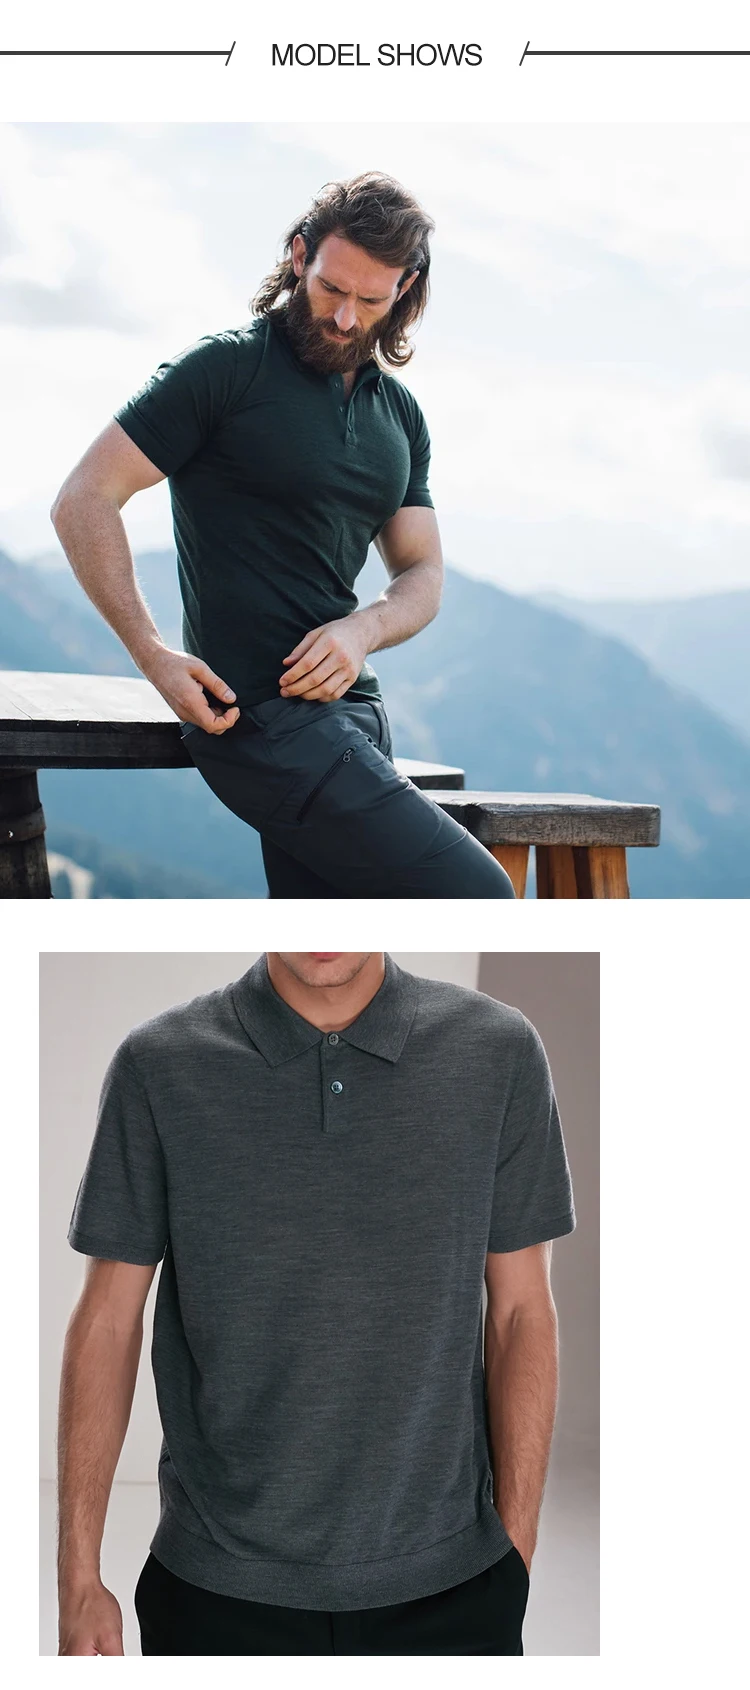 Enerup 100% merino wool polyester coolmax golf camisas camisetas polo suit tops t-shirt